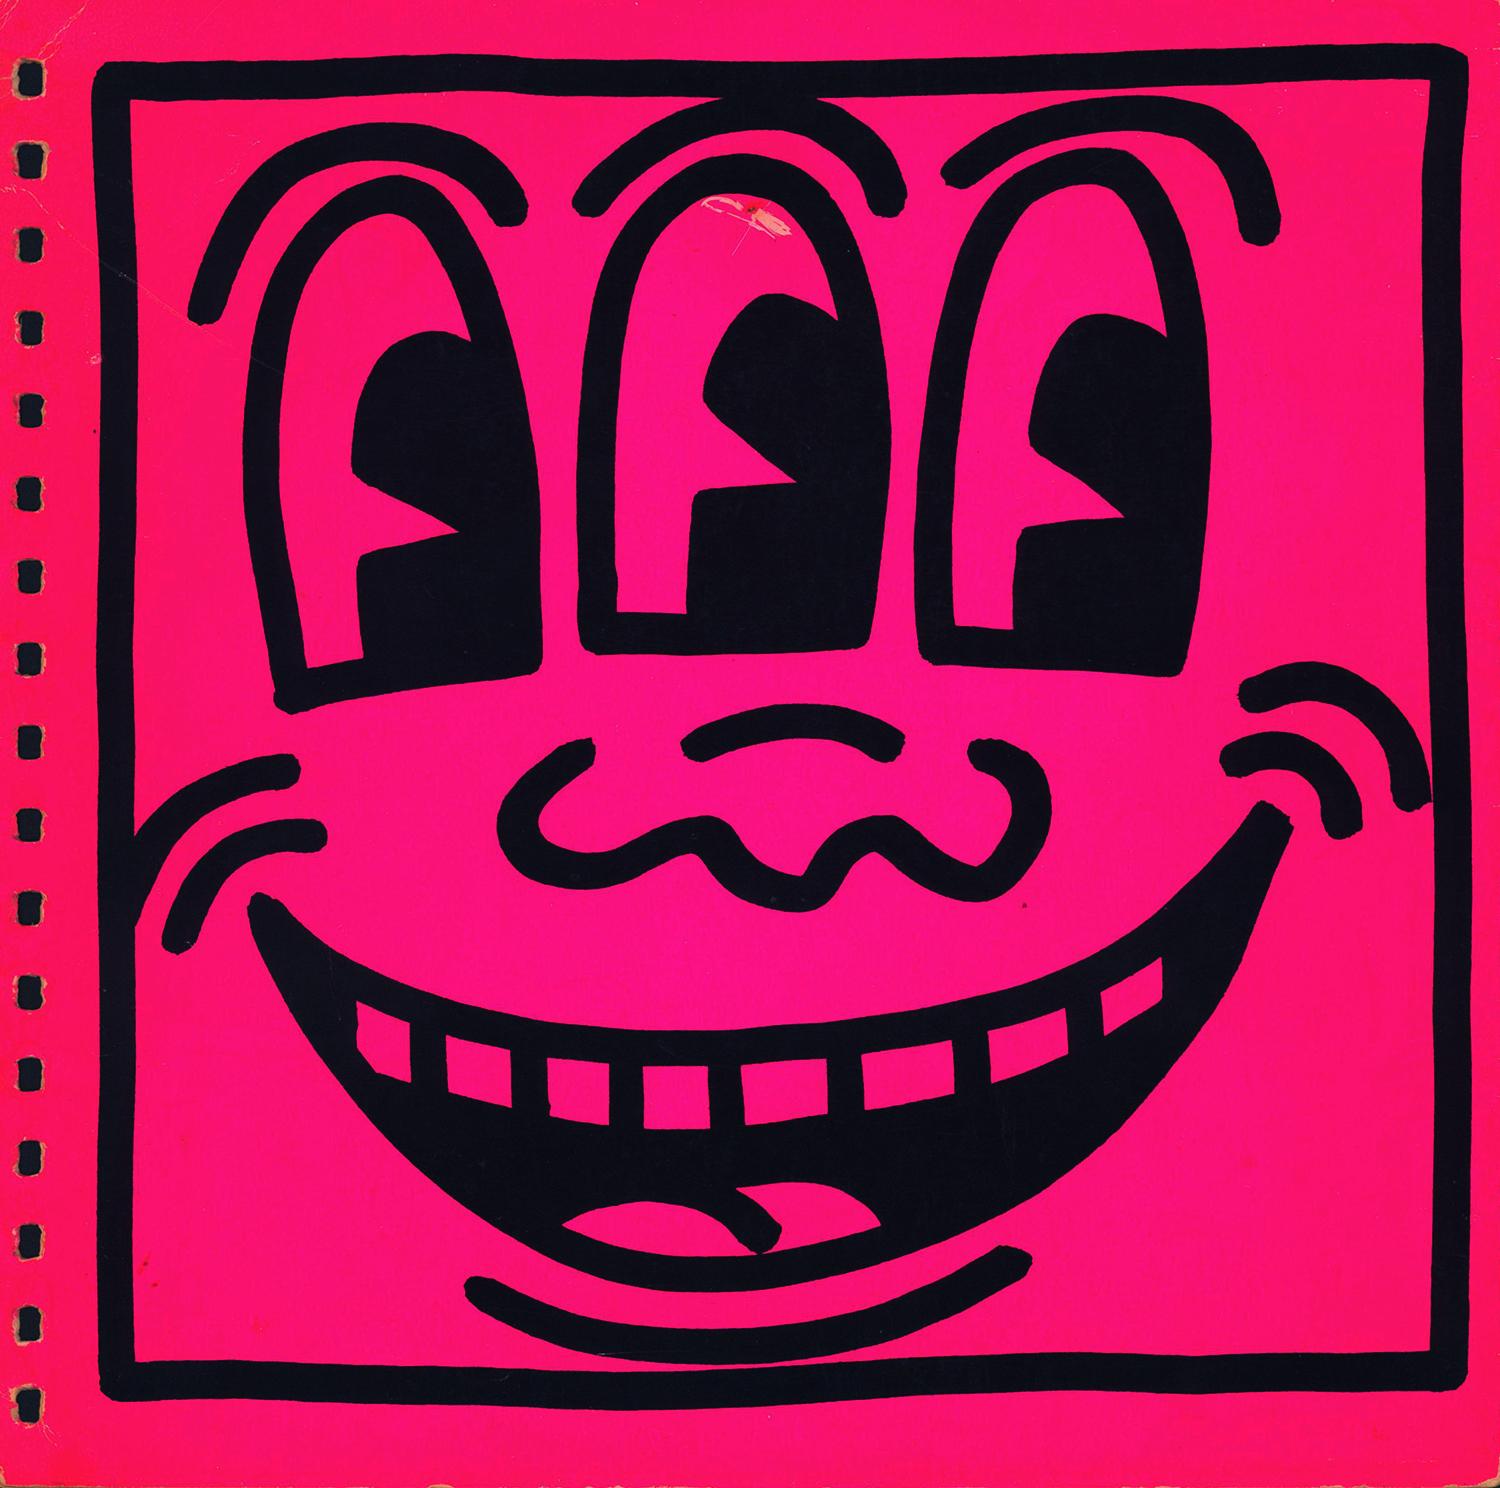 Keith Haring cover art 1982 (Keith Haring Three Eyed face) 